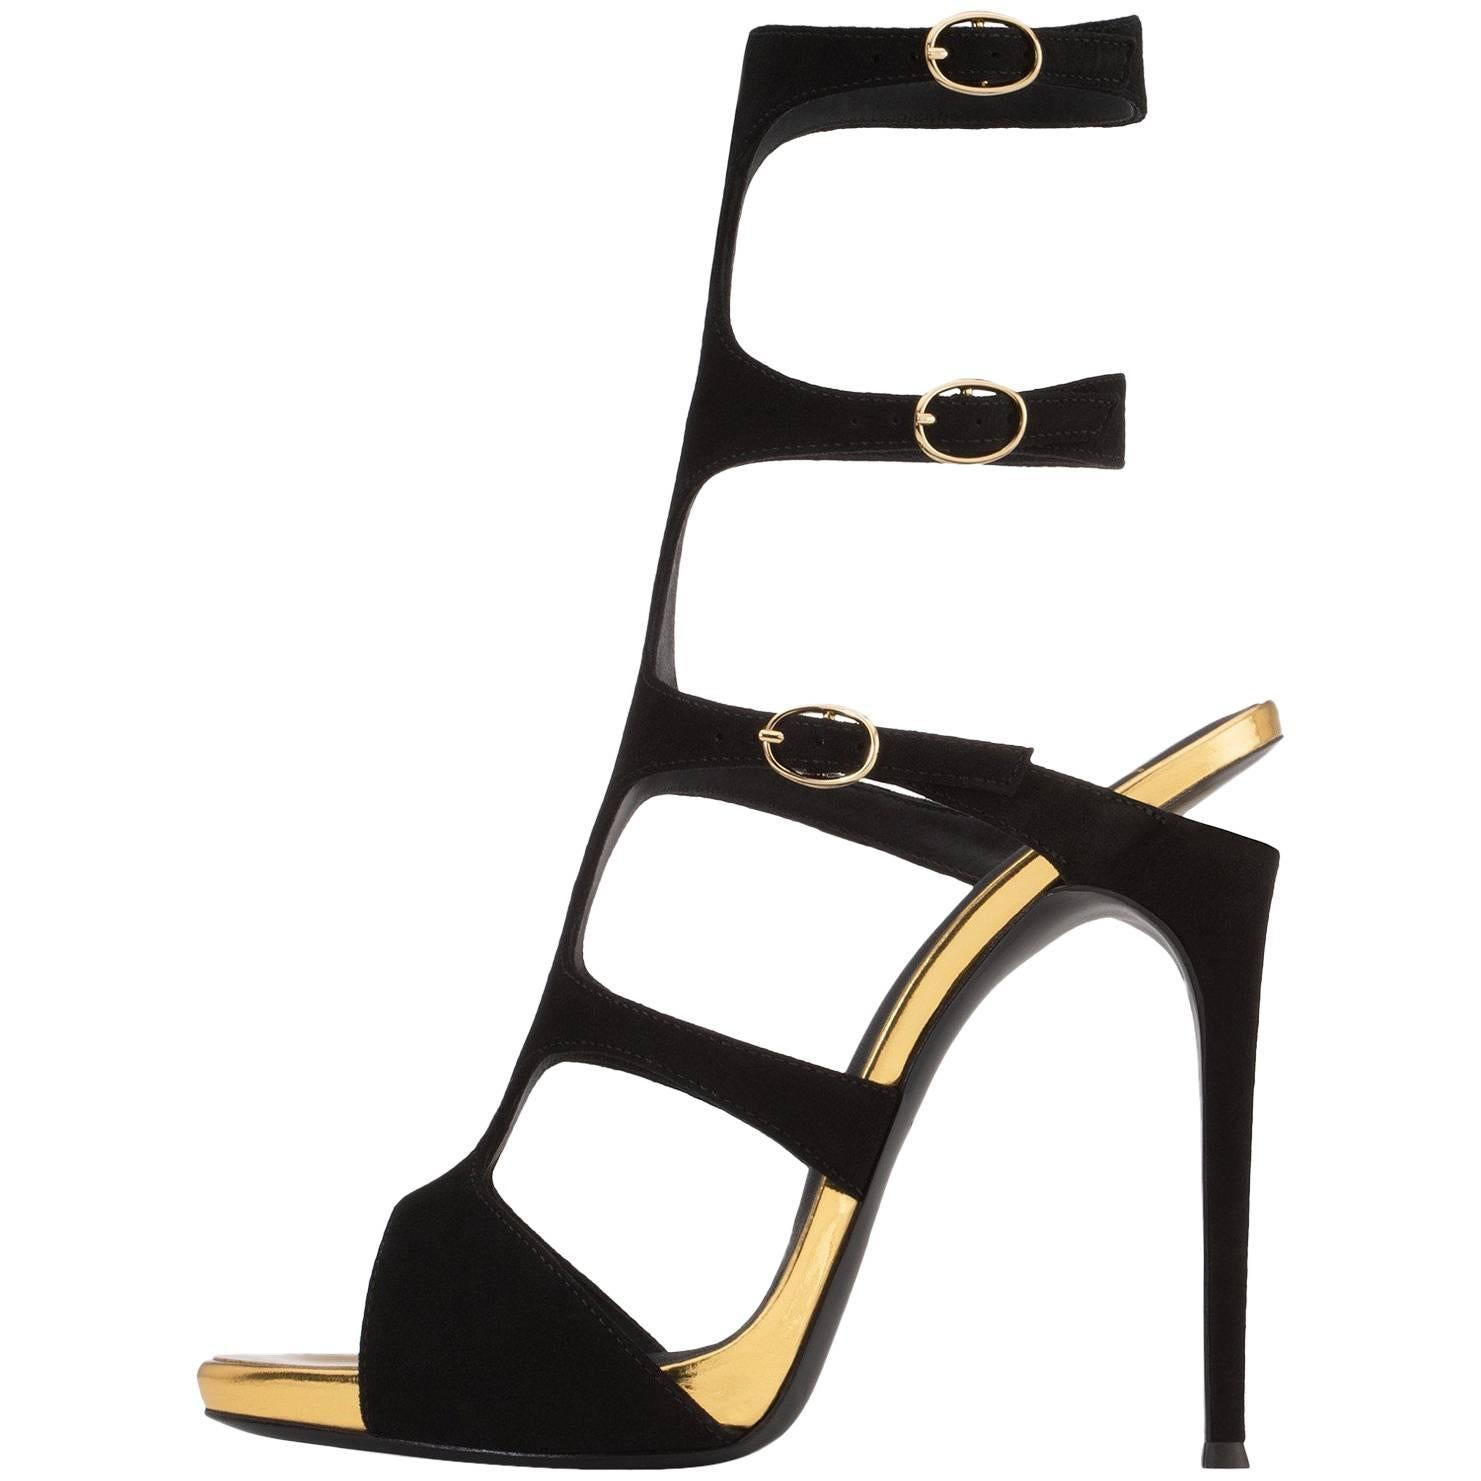 Giuseppe Zanotti New Black Suede Gold Evening Sandals Heels 